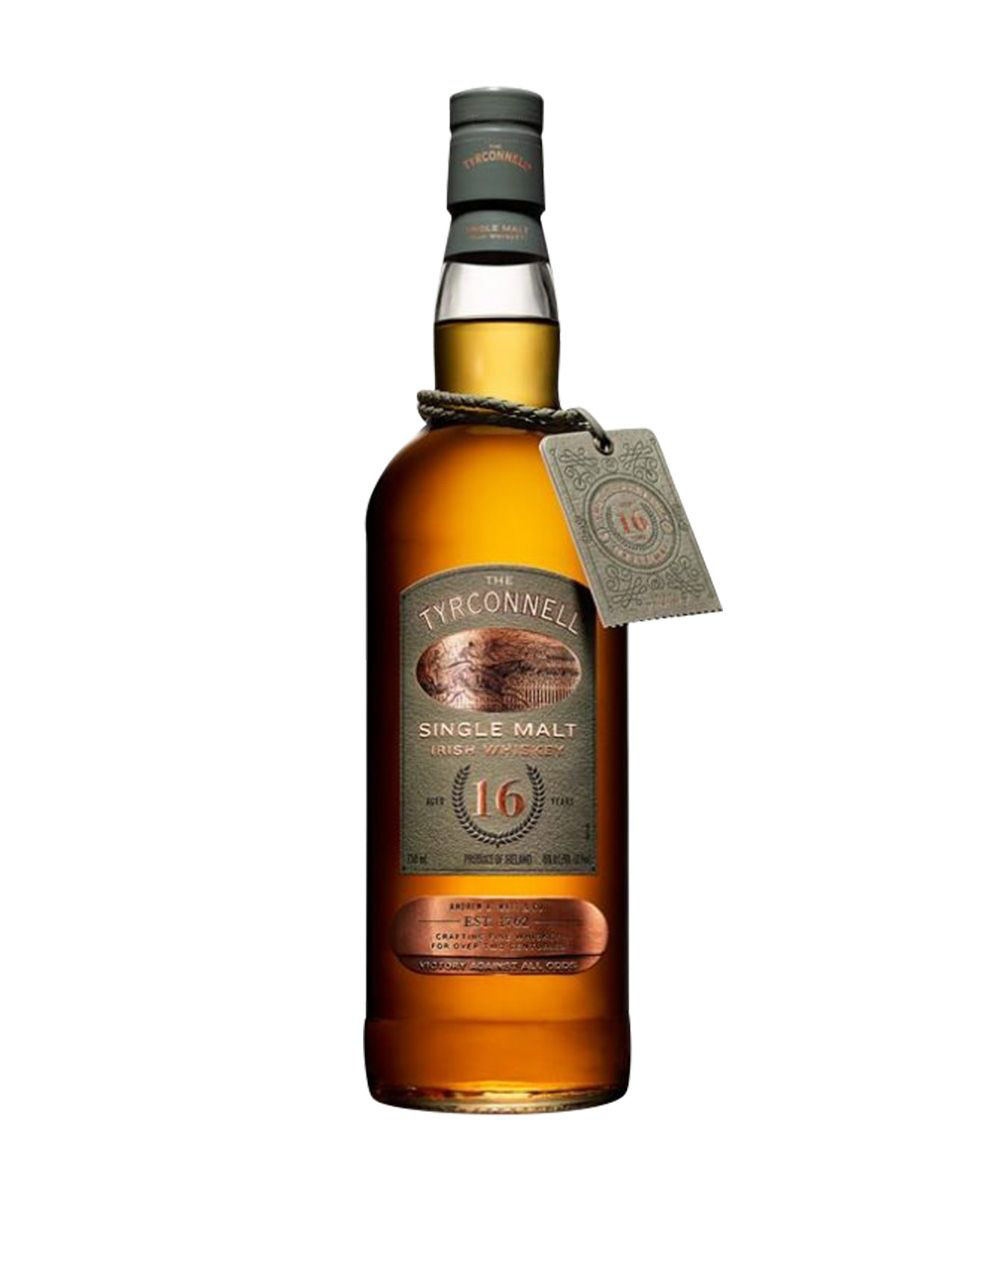 The Tyrconnell 16 Year Single Malt Irish Whiskey